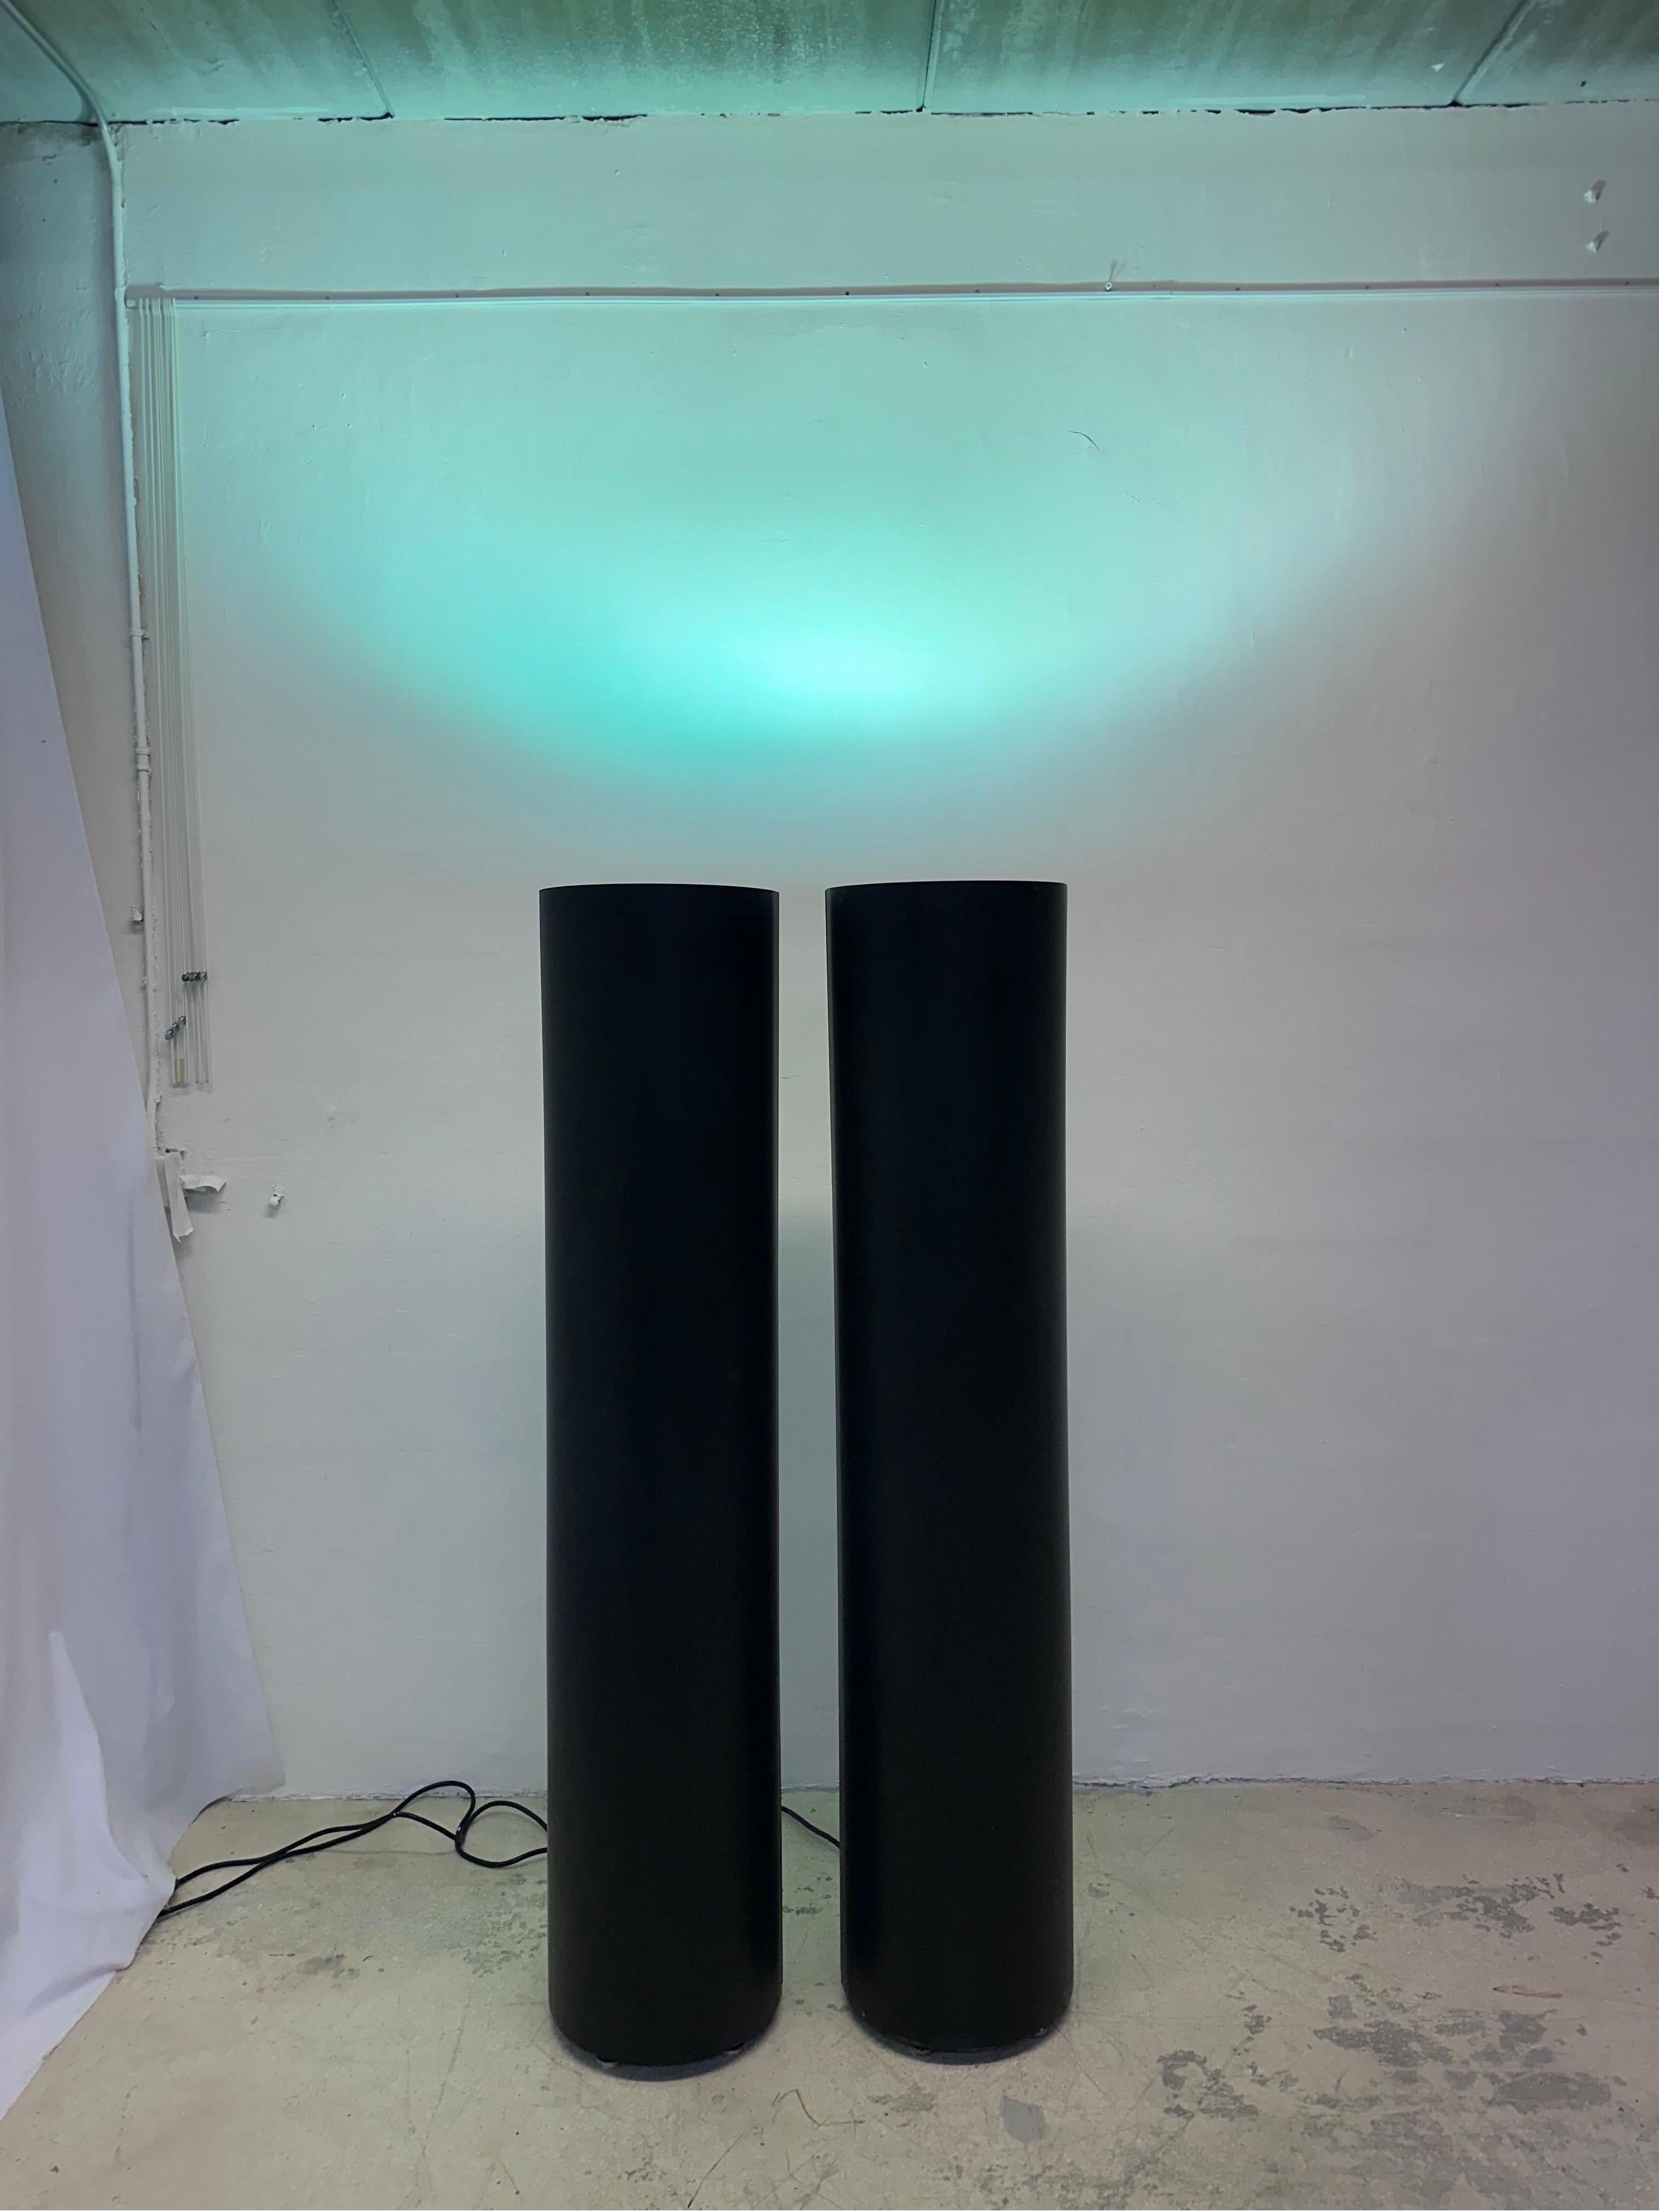 Postmodern Black Torchiere Mercury Bulb Floor Lamps - a Pair For Sale 6